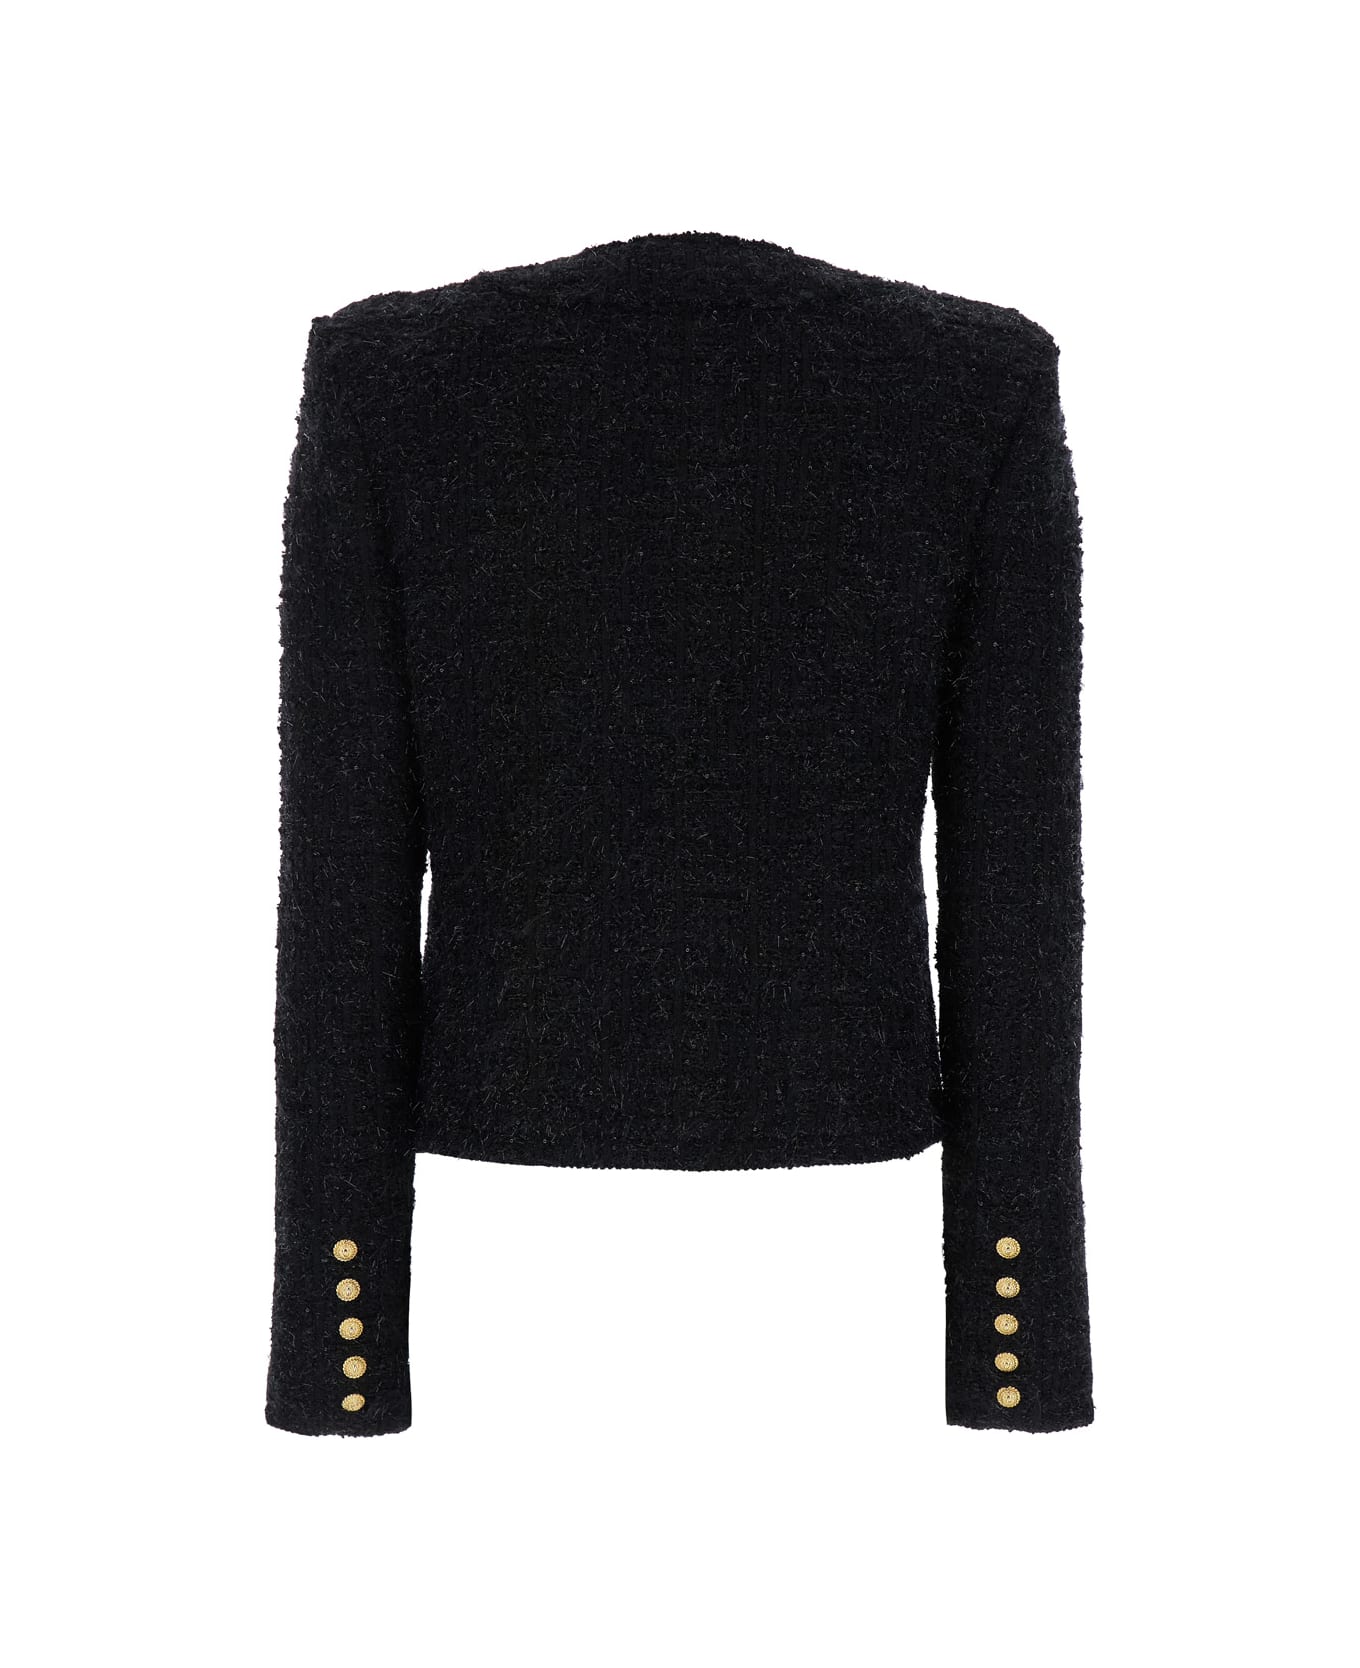 Balmain 'miami' Black Collarless Jacket With Jewel Buttons In Tweed Woman - Black